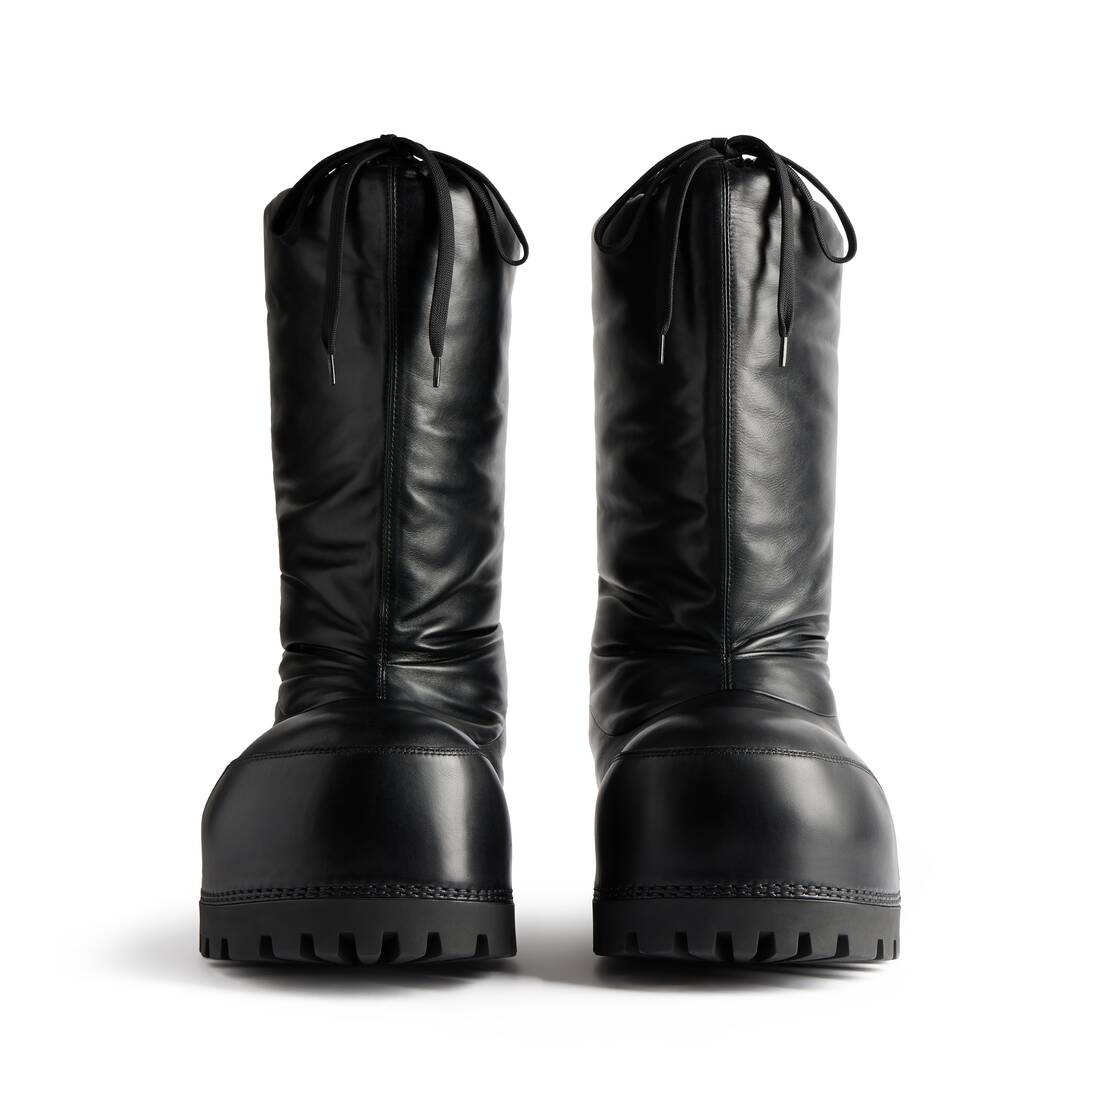 Men's Alaska High Boot in Black